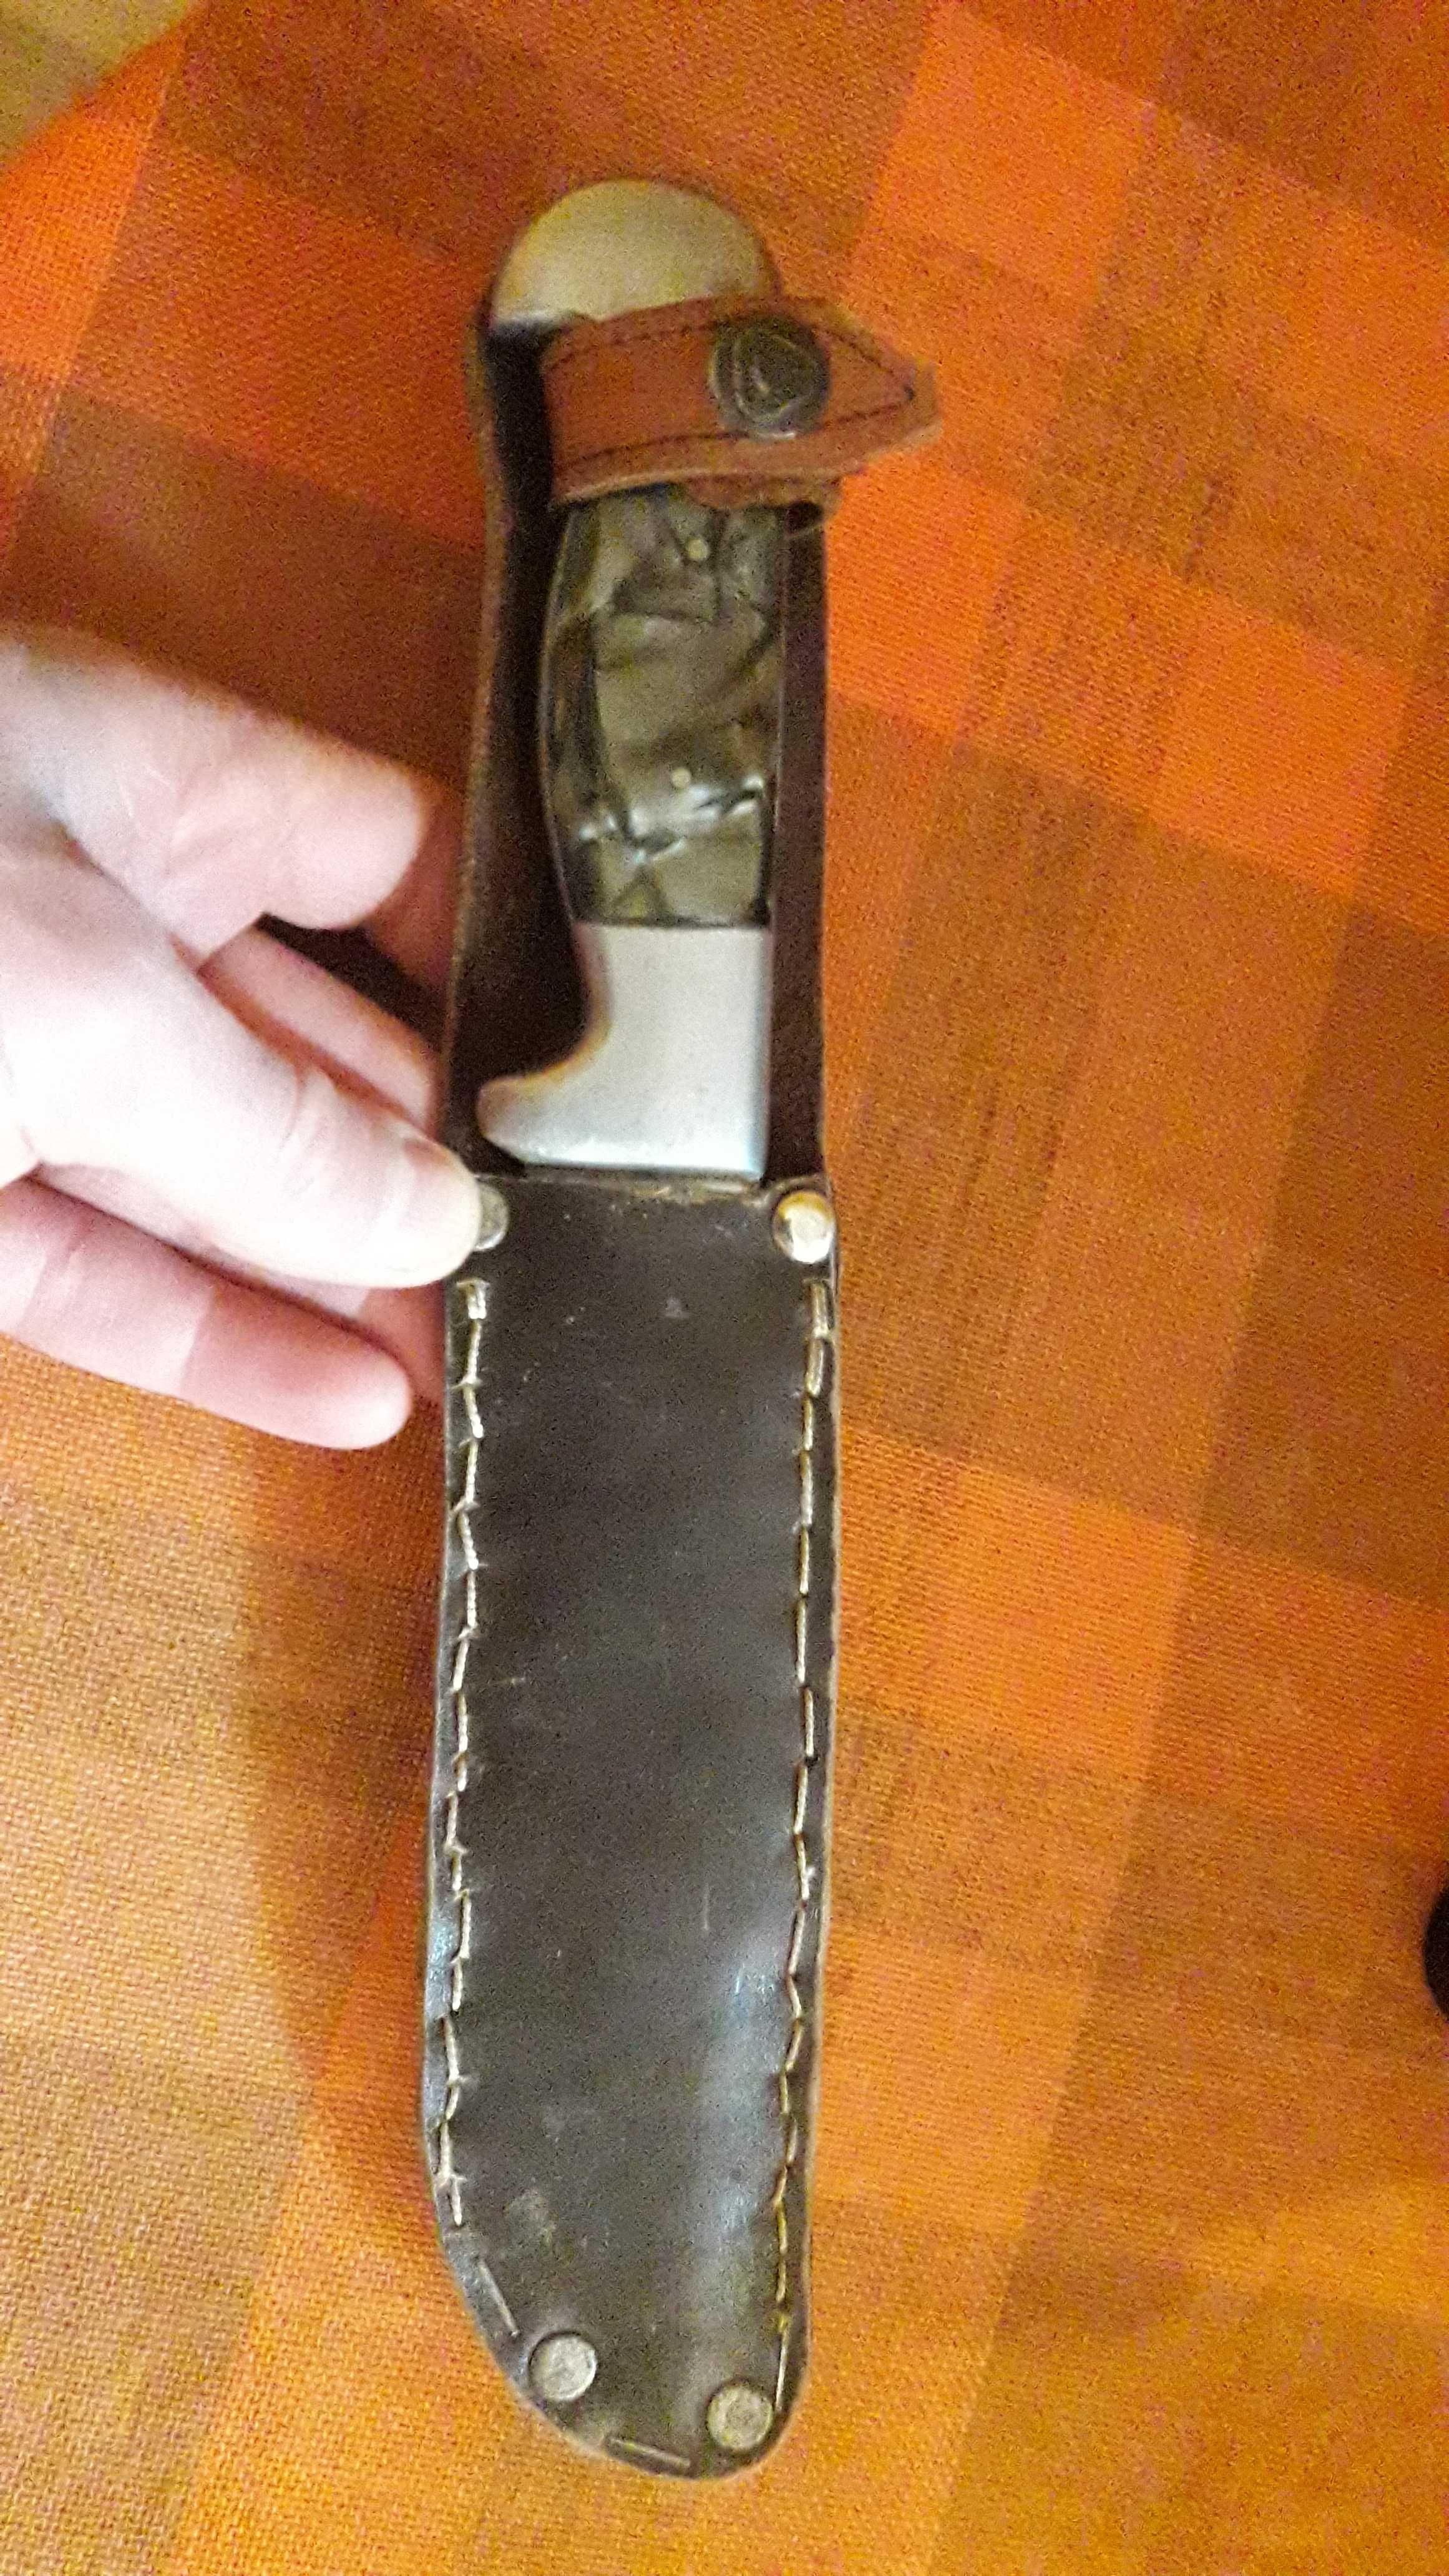 Нож. Стар български нож Хан Тервел